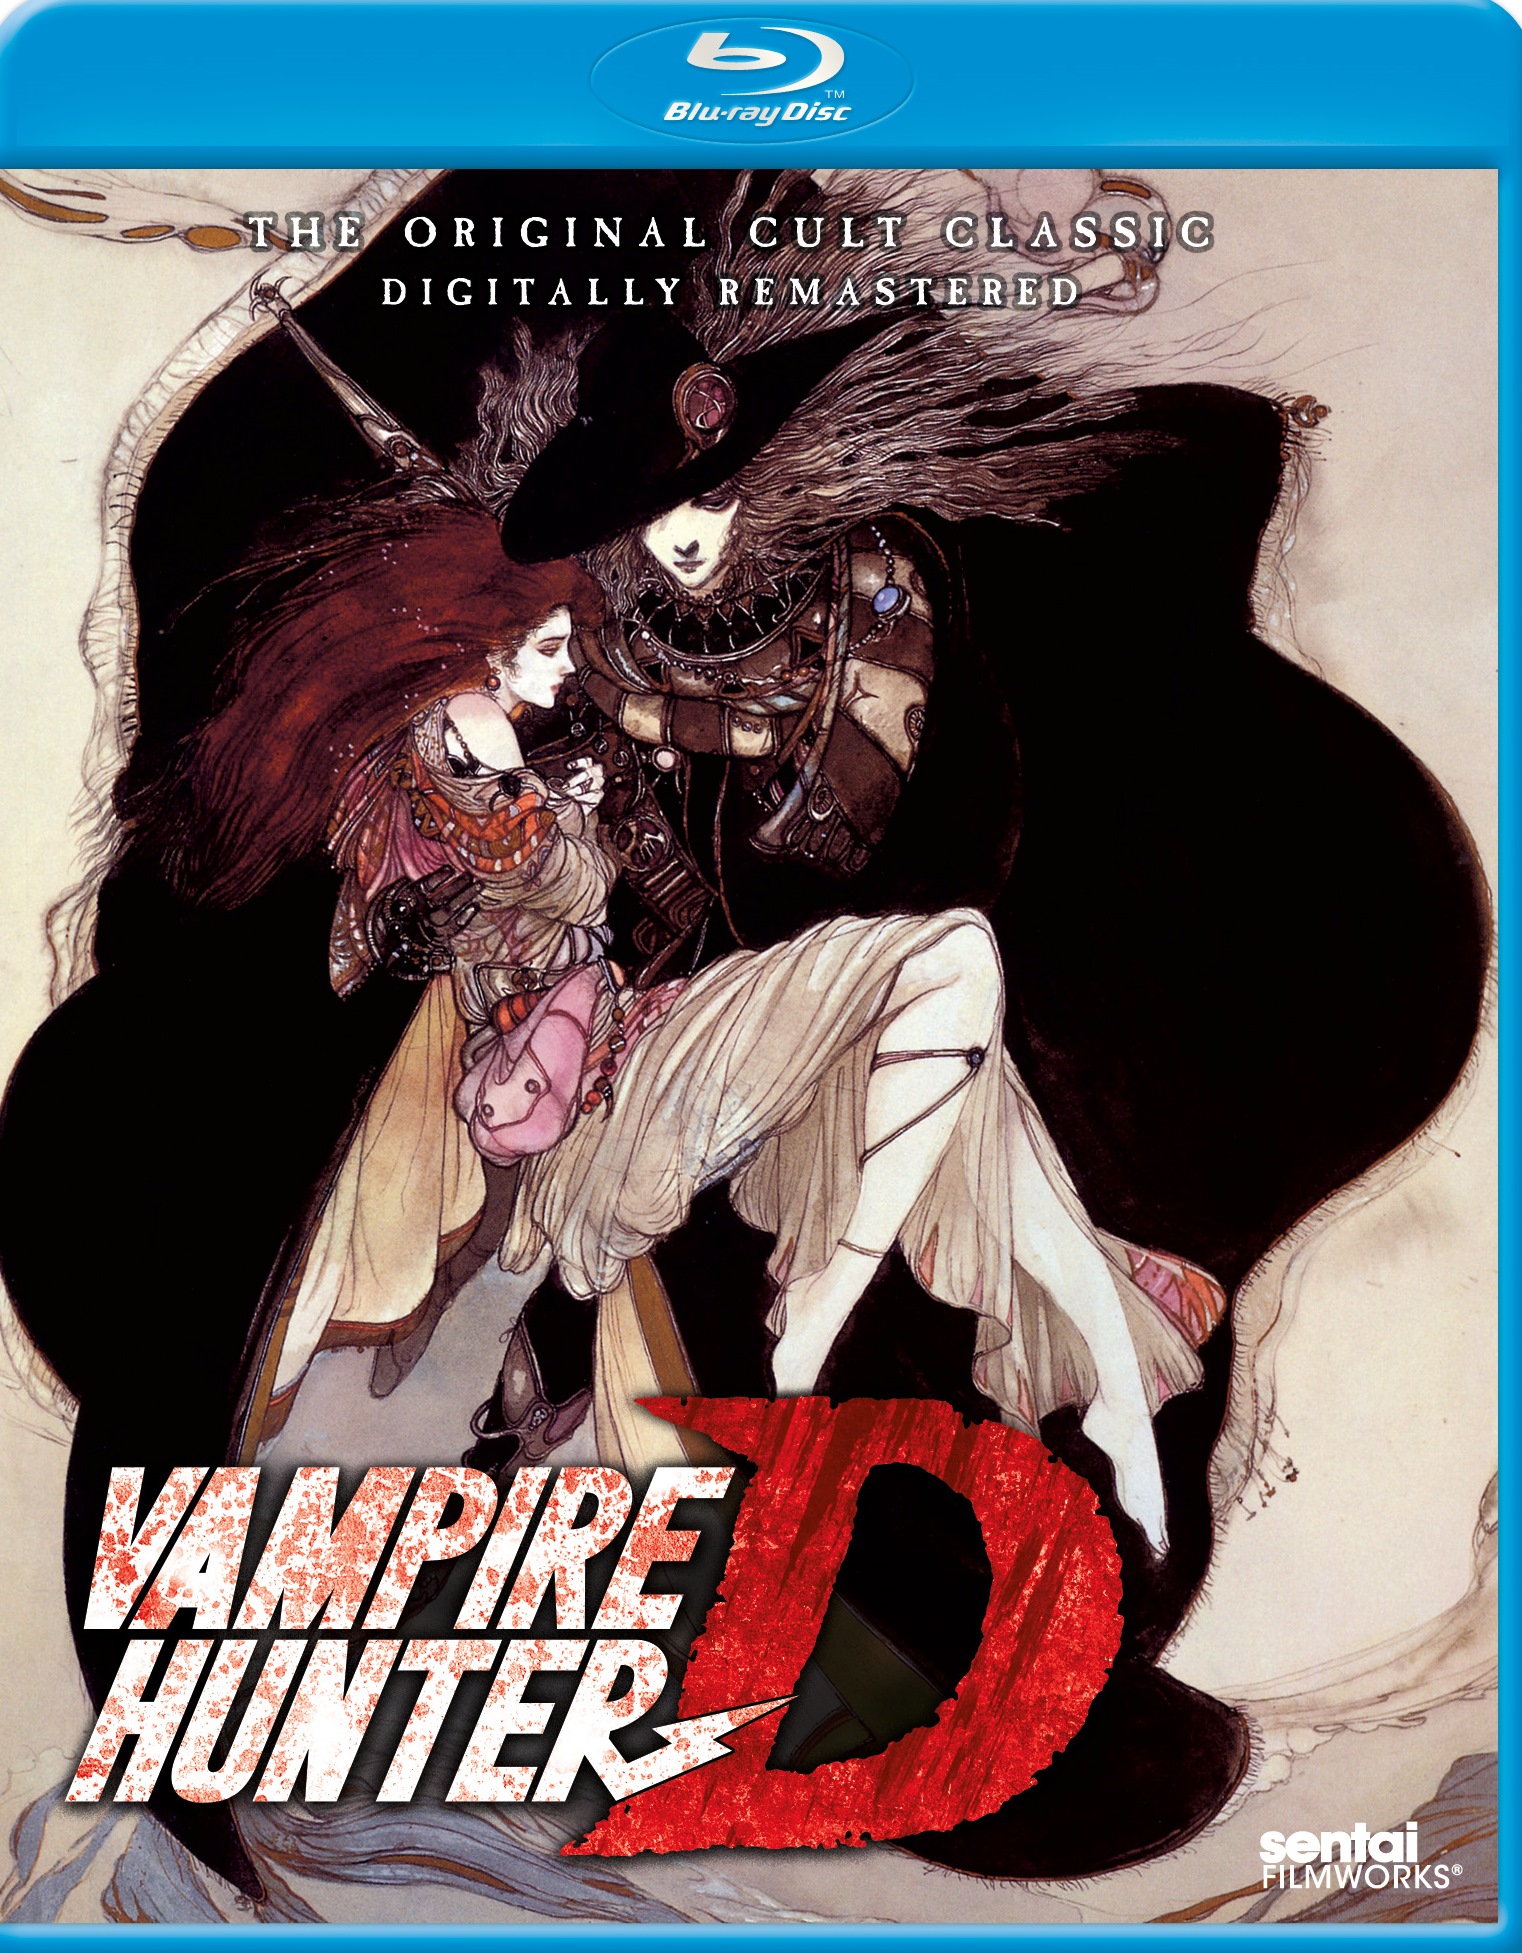 VAMPIRE HUNTER D: Bloodlust movie review